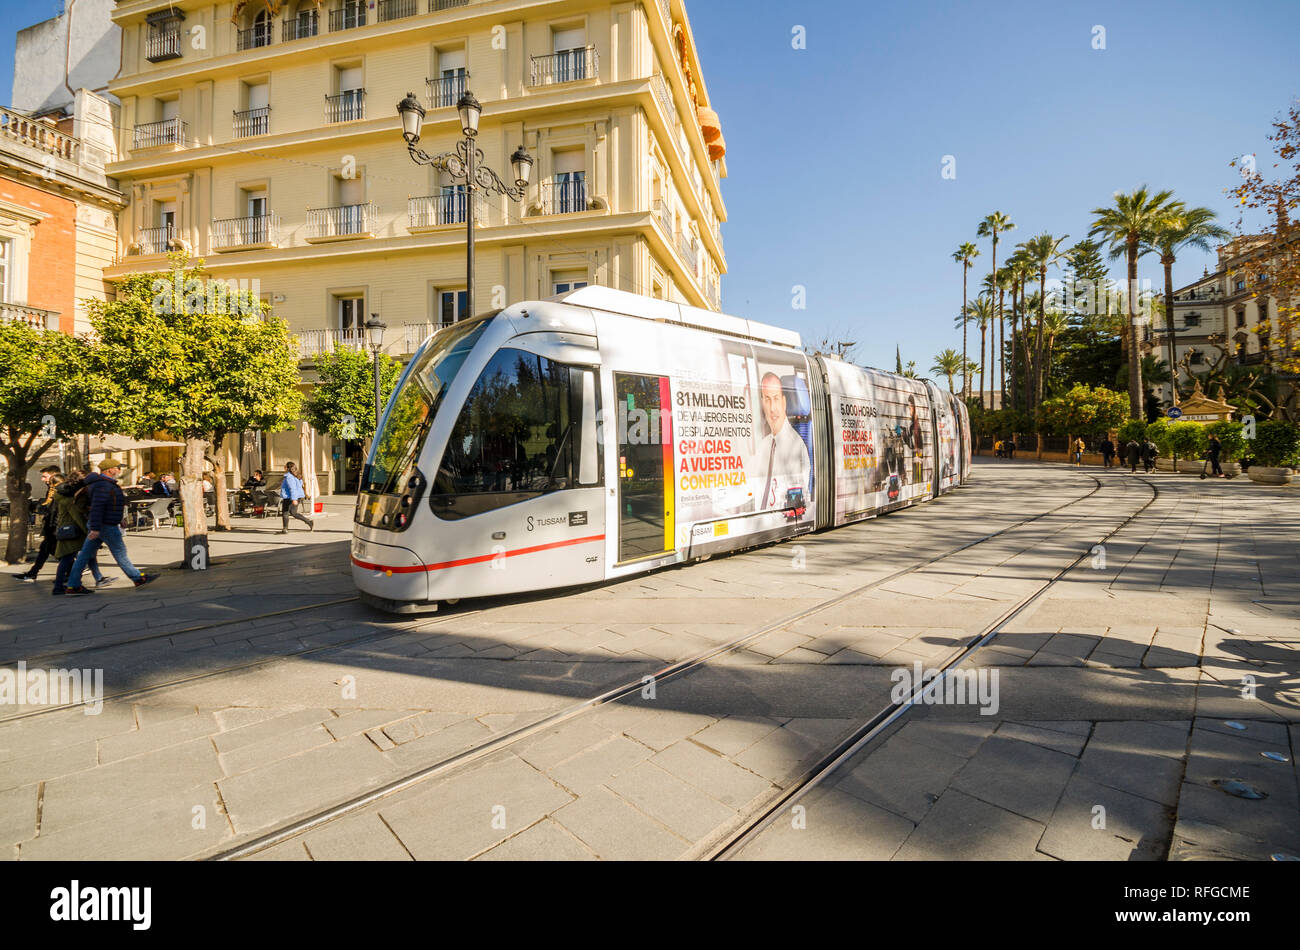 The tram (tranvia) public transport system in Seville, Plaza nueva, Andalucia, Spain. Stock Photo